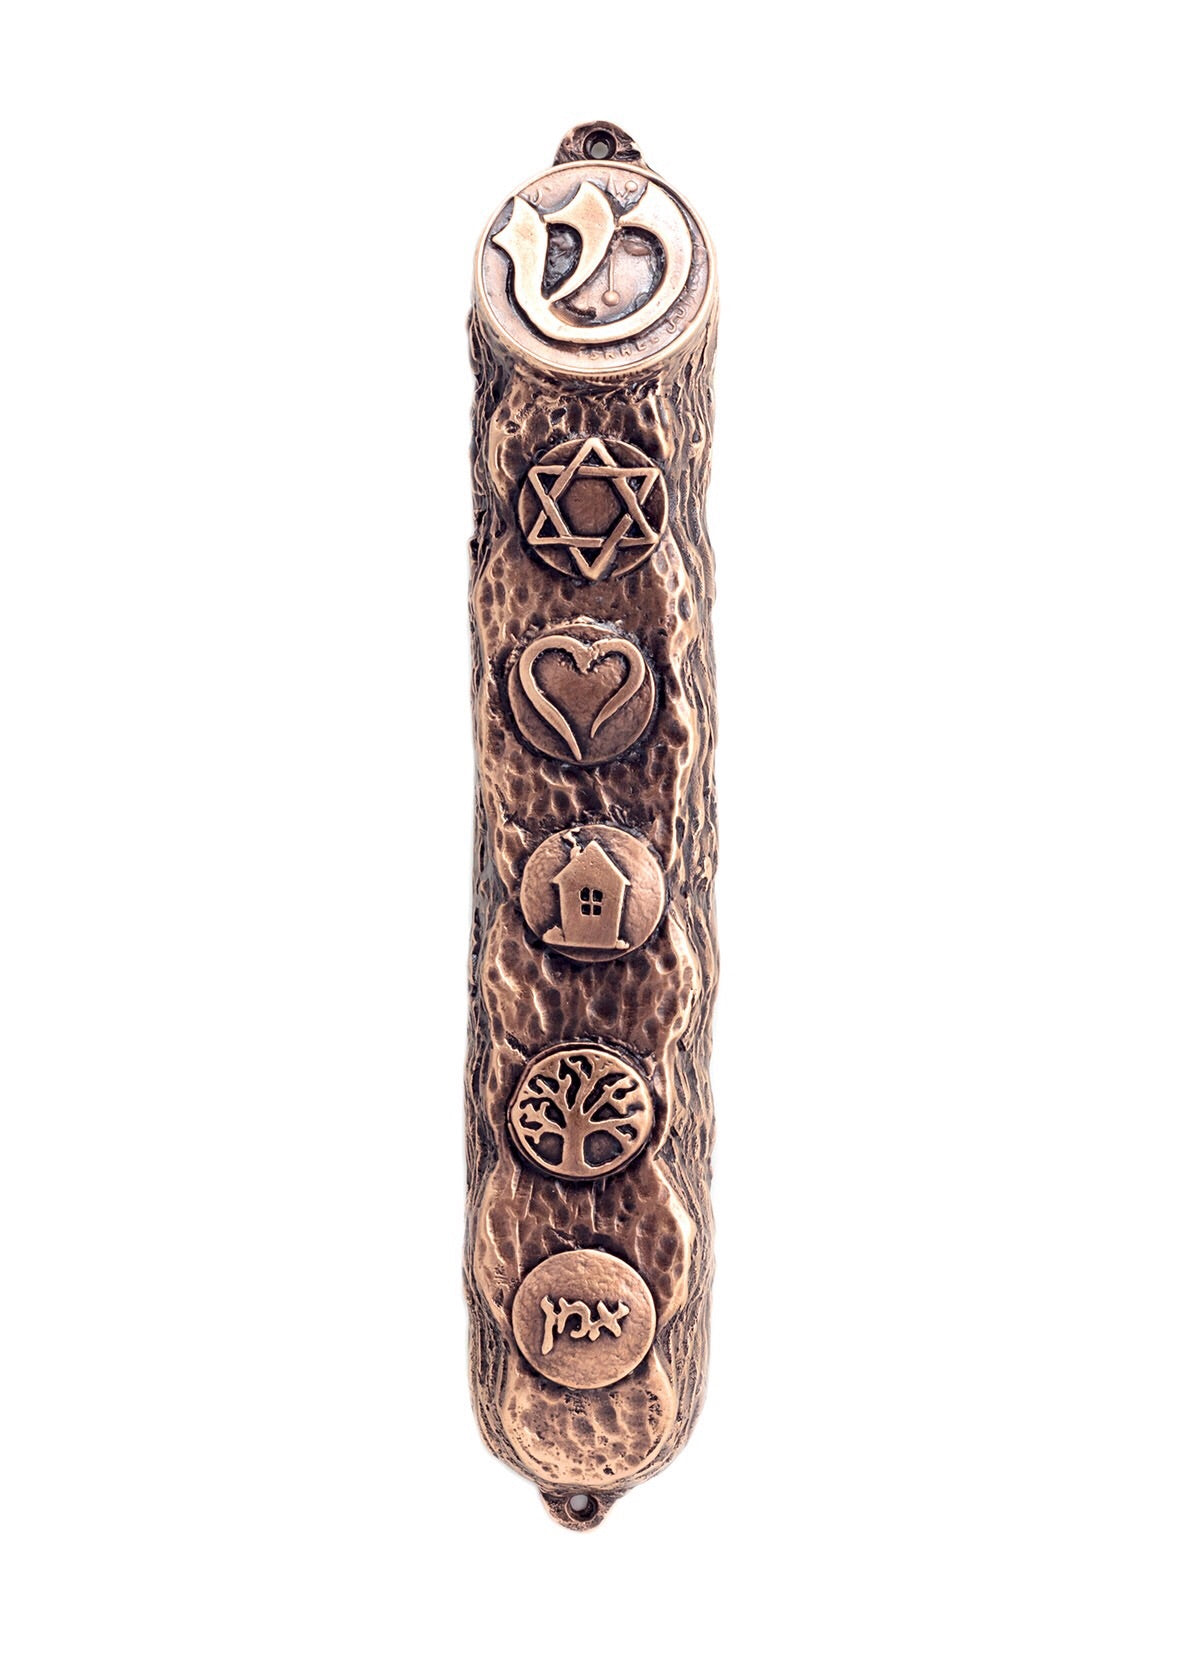 Copper Mezuzah Case, Mezuzah with Scroll for Door, Ornate Mezuzah, Intricate Royal Mezzuzahs, Judaica Gifts for Home 16cm / 6.3Inch